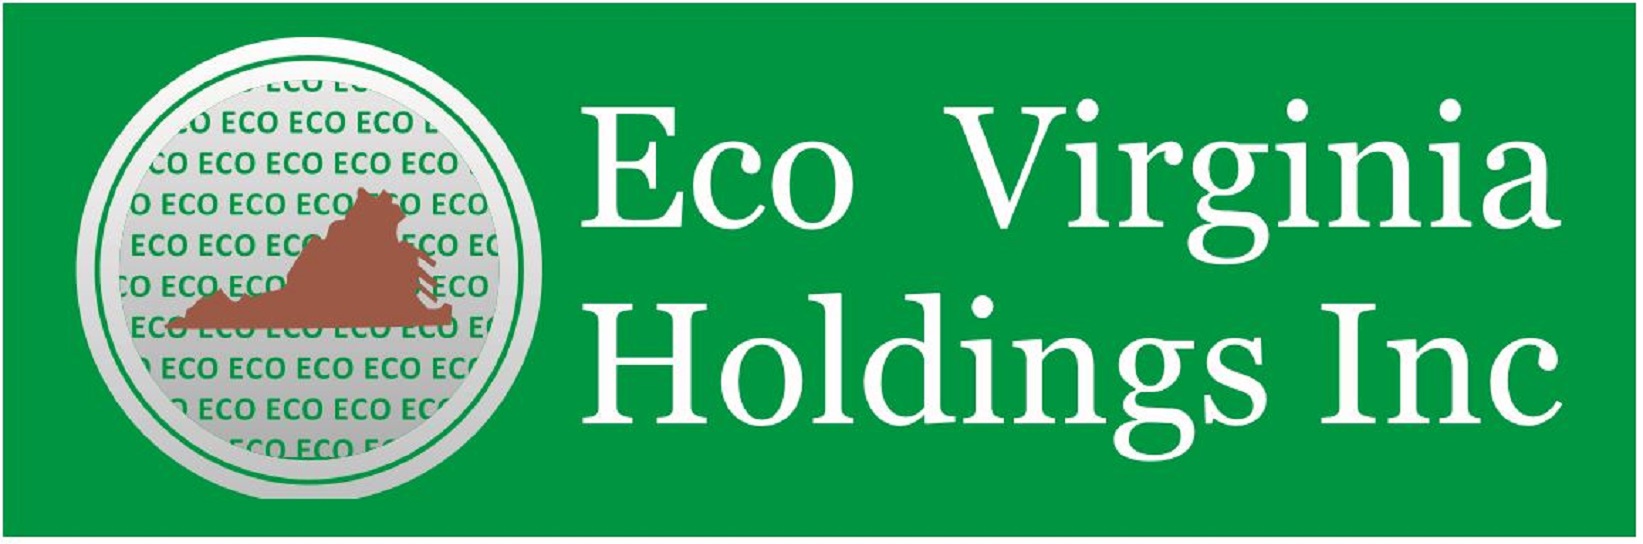 Eco Virginia Holdings, Inc